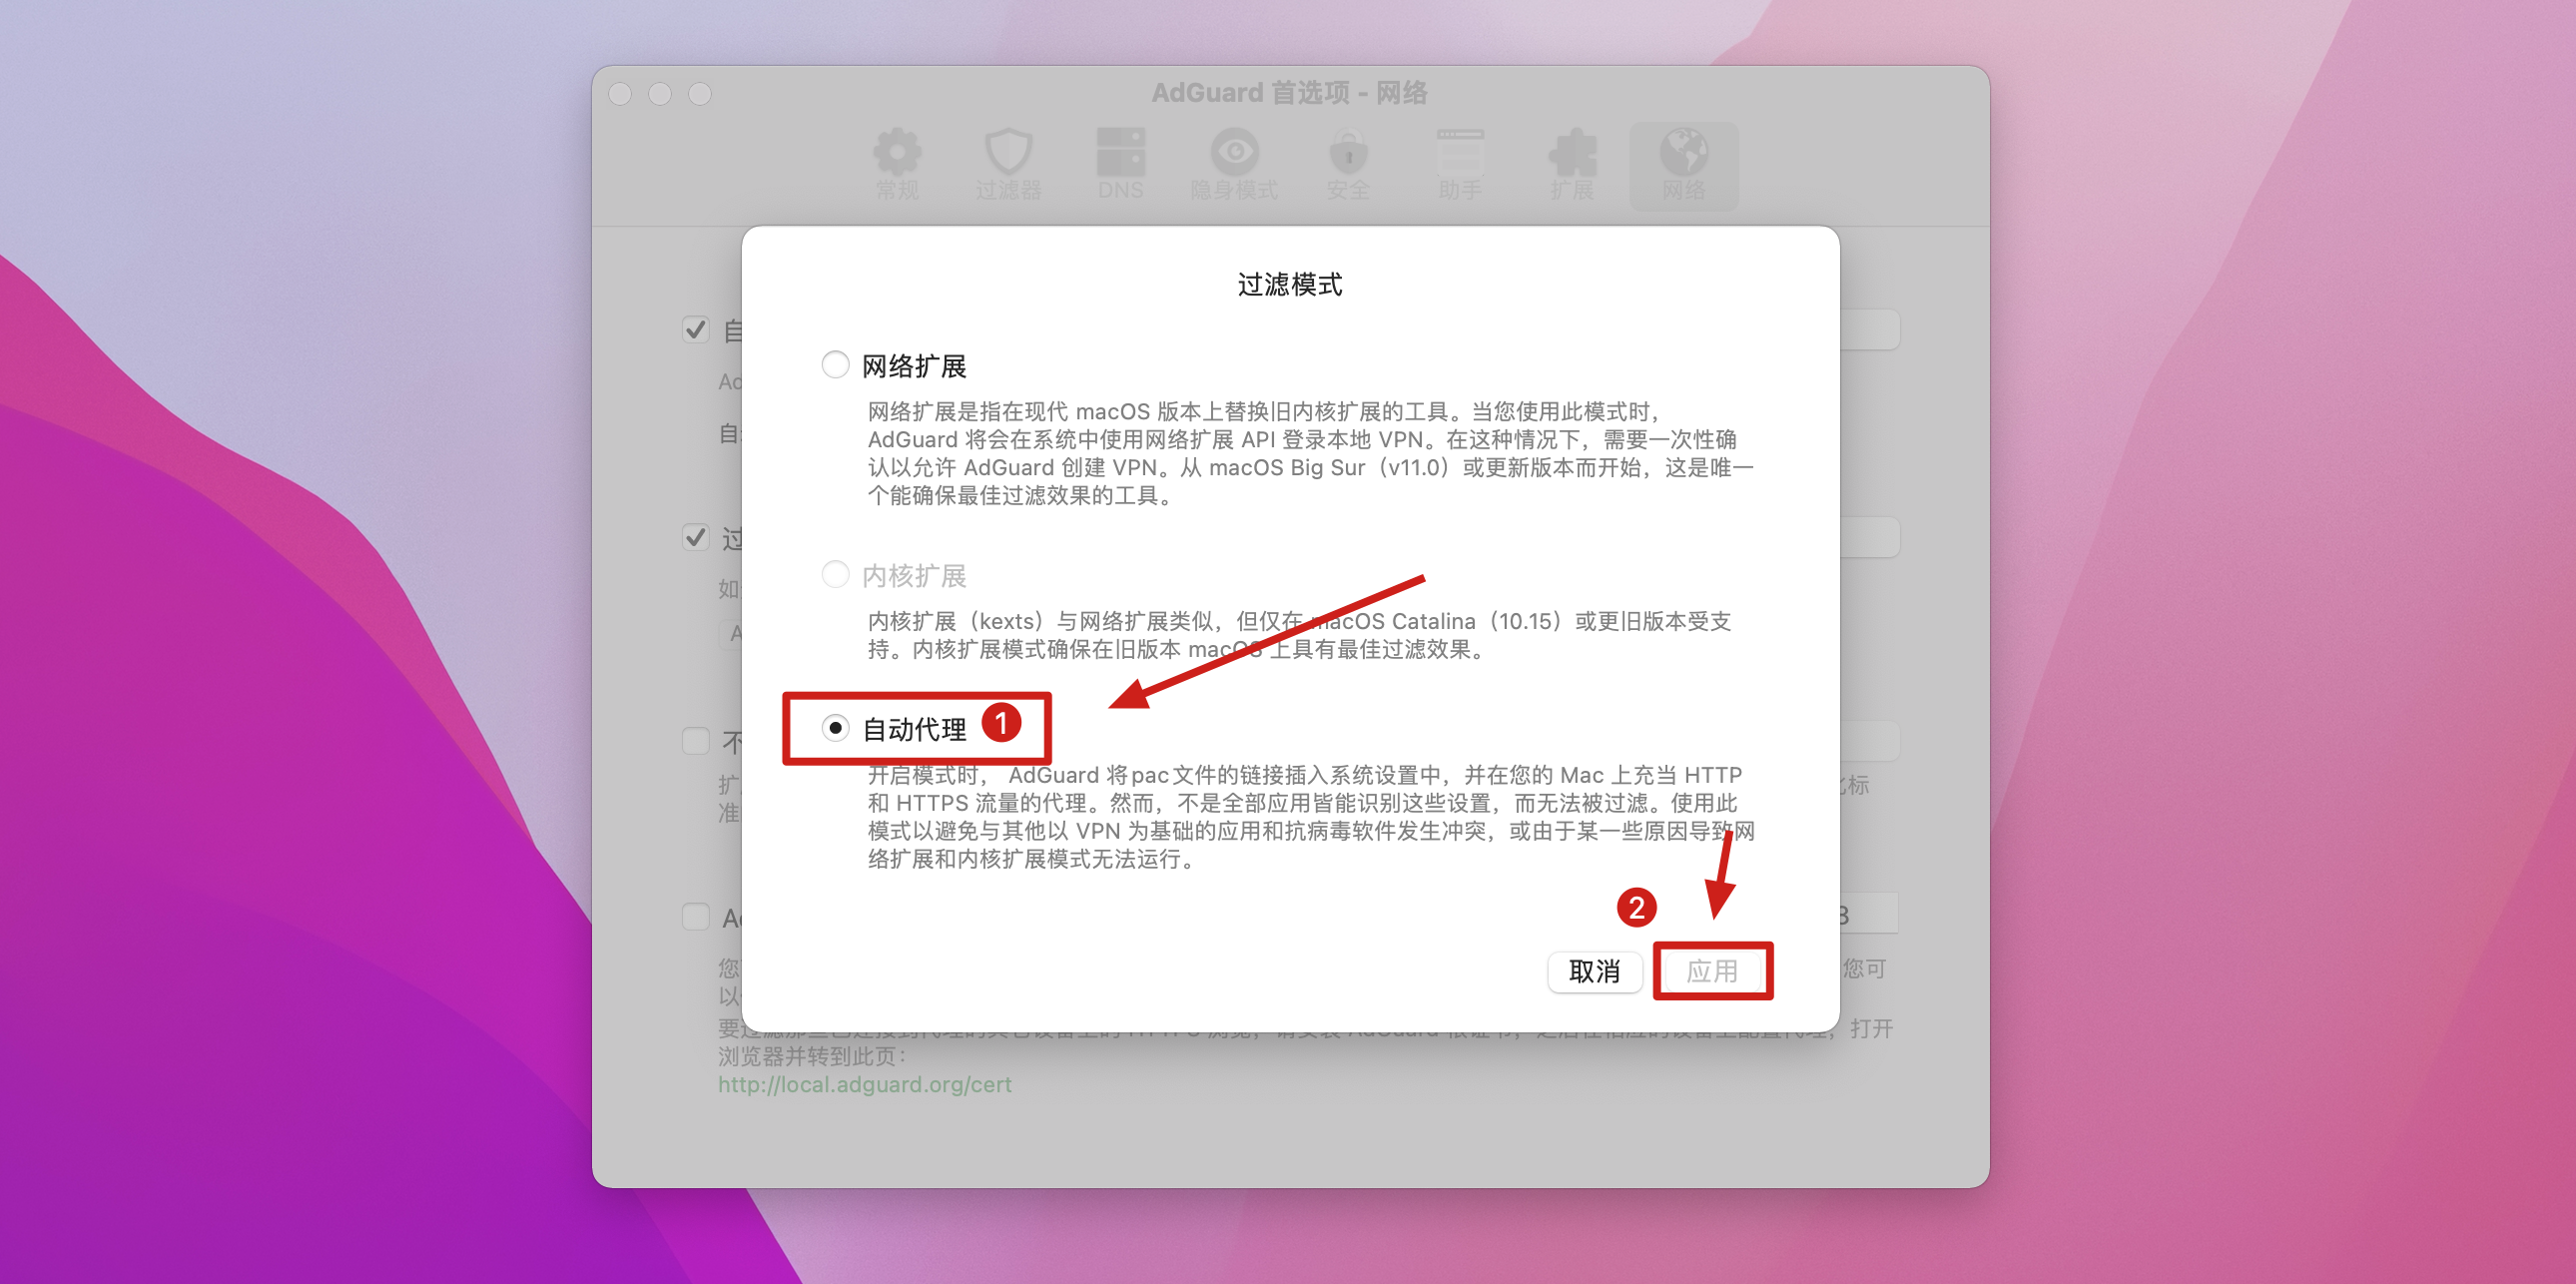 Adguard v2.9.2 (1234) 中文测试破解版 好用的广告过滤软件